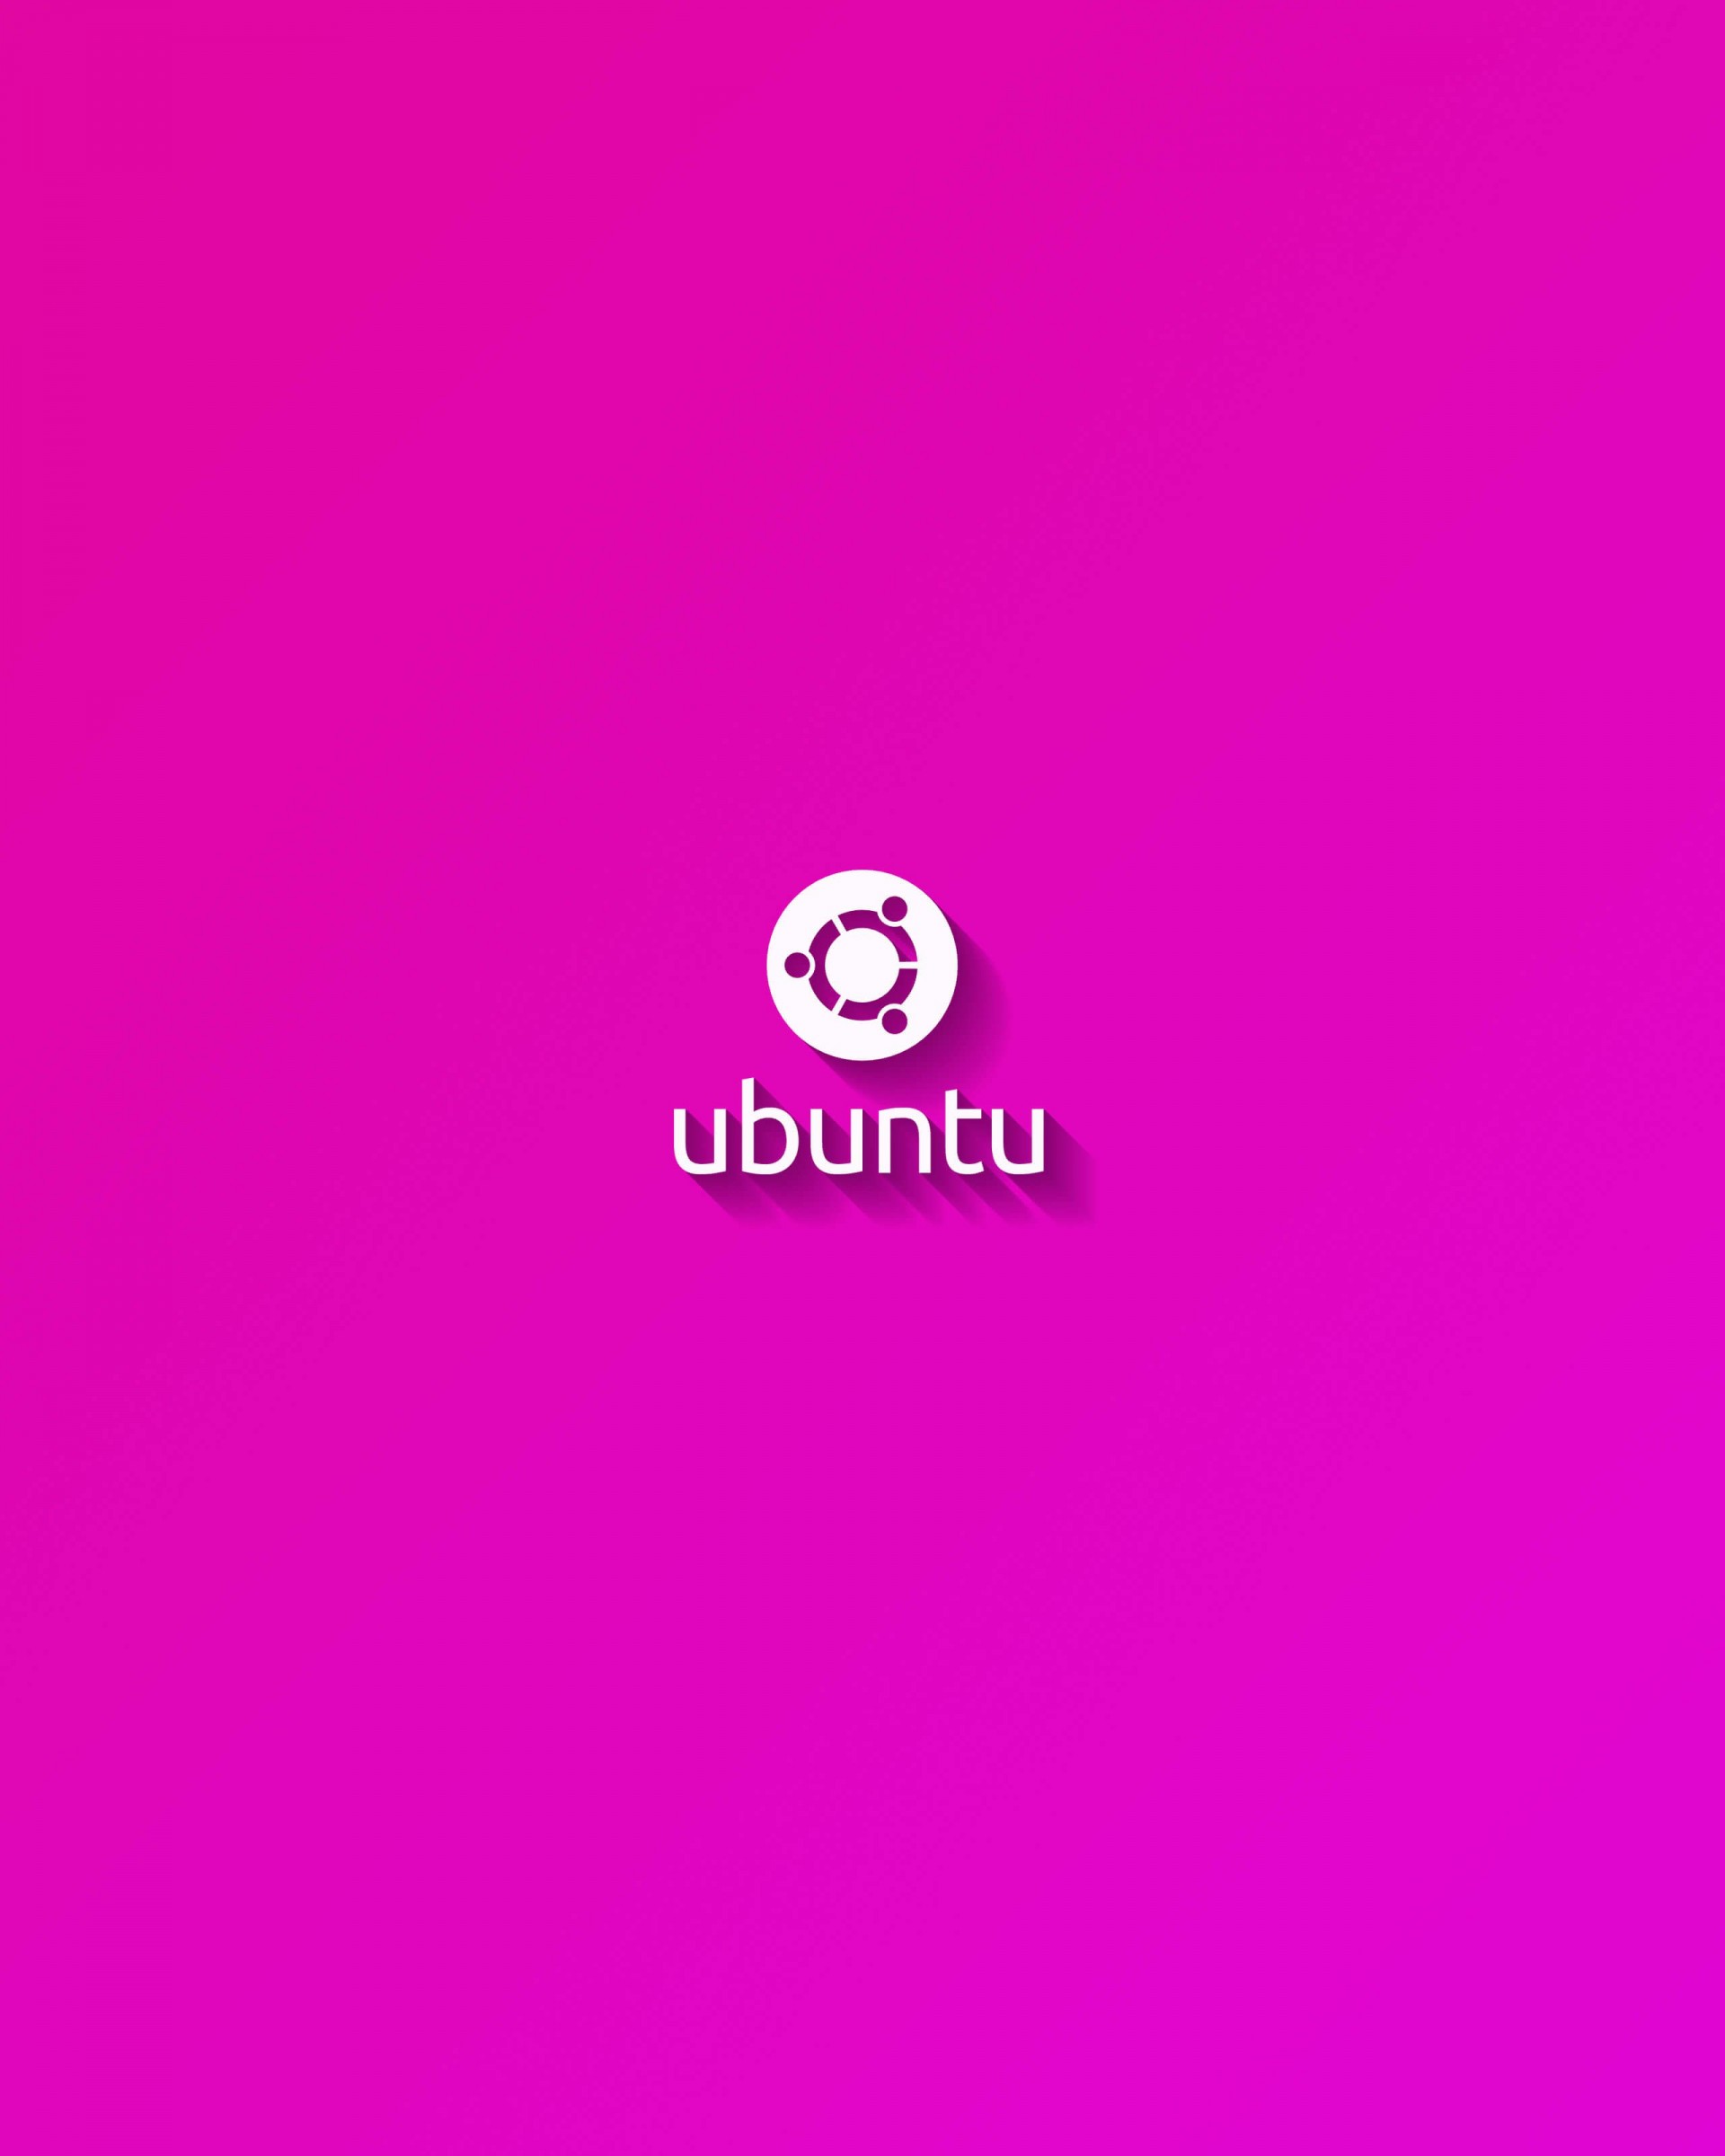 Ubuntu Flat Shadow Pink Wallpaper for Google Nexus 7